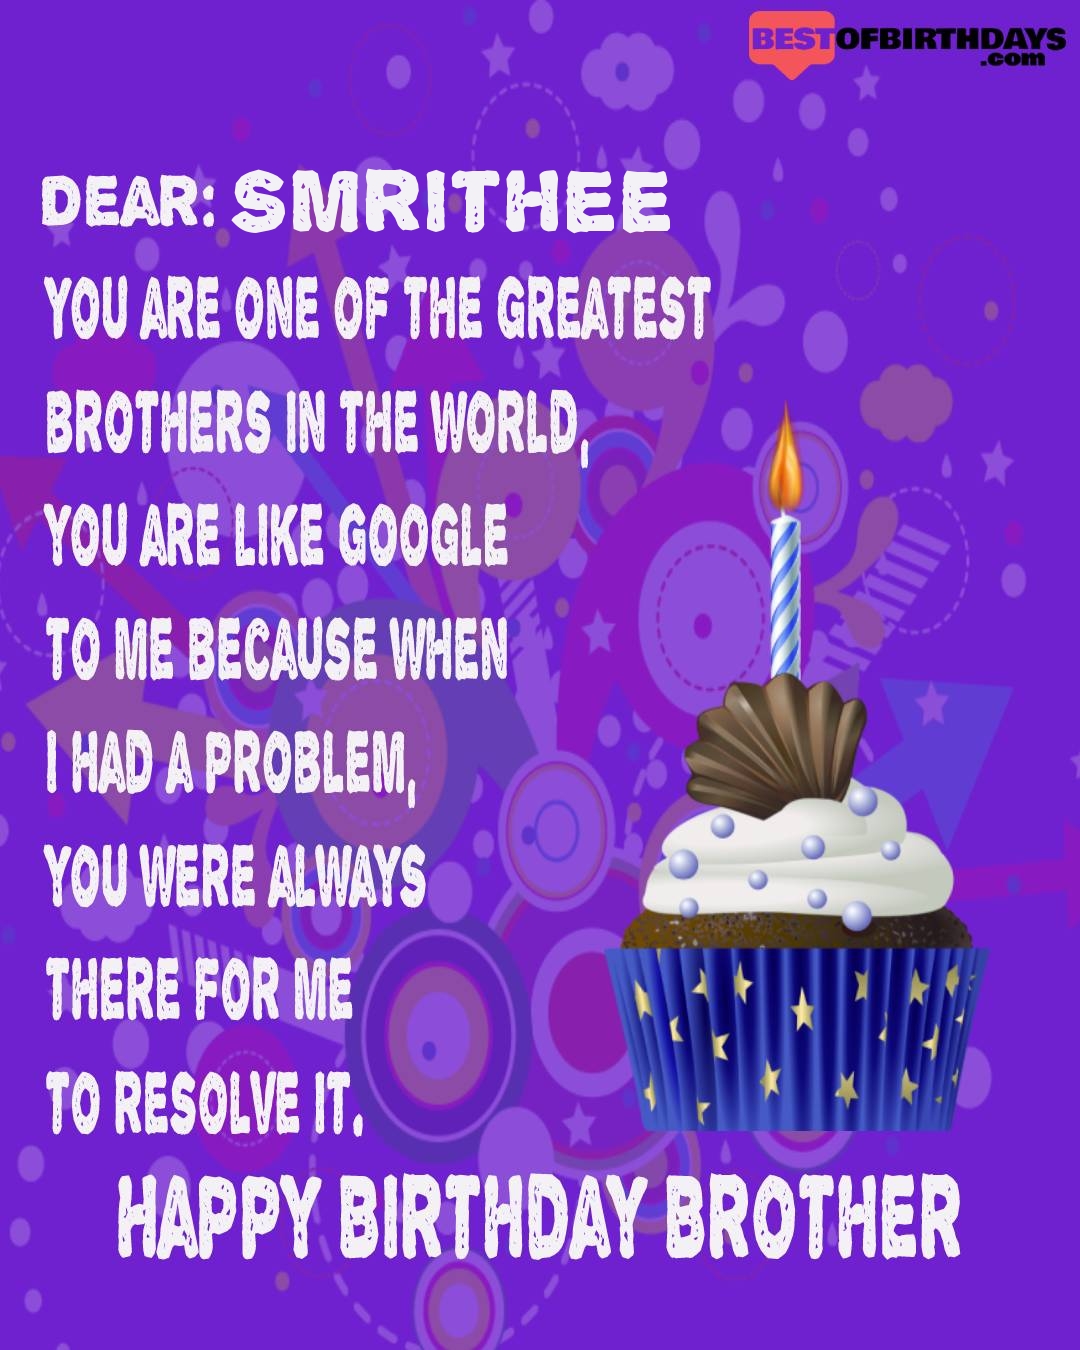 Happy birthday smrithee bhai brother bro